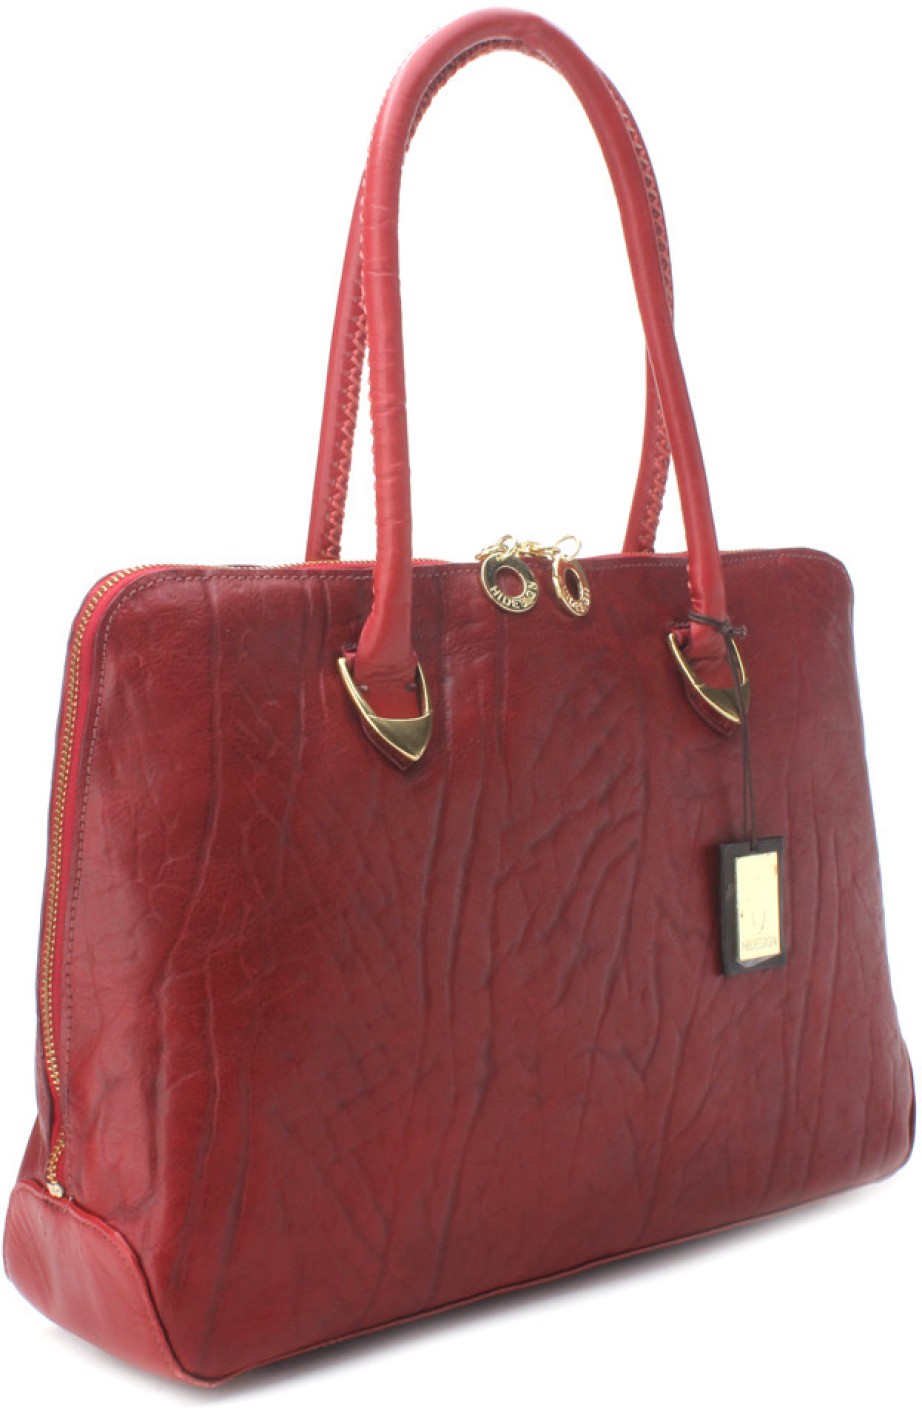 Buy Hidesign Hand-held Bag Red Online @ Best Price in India | 0